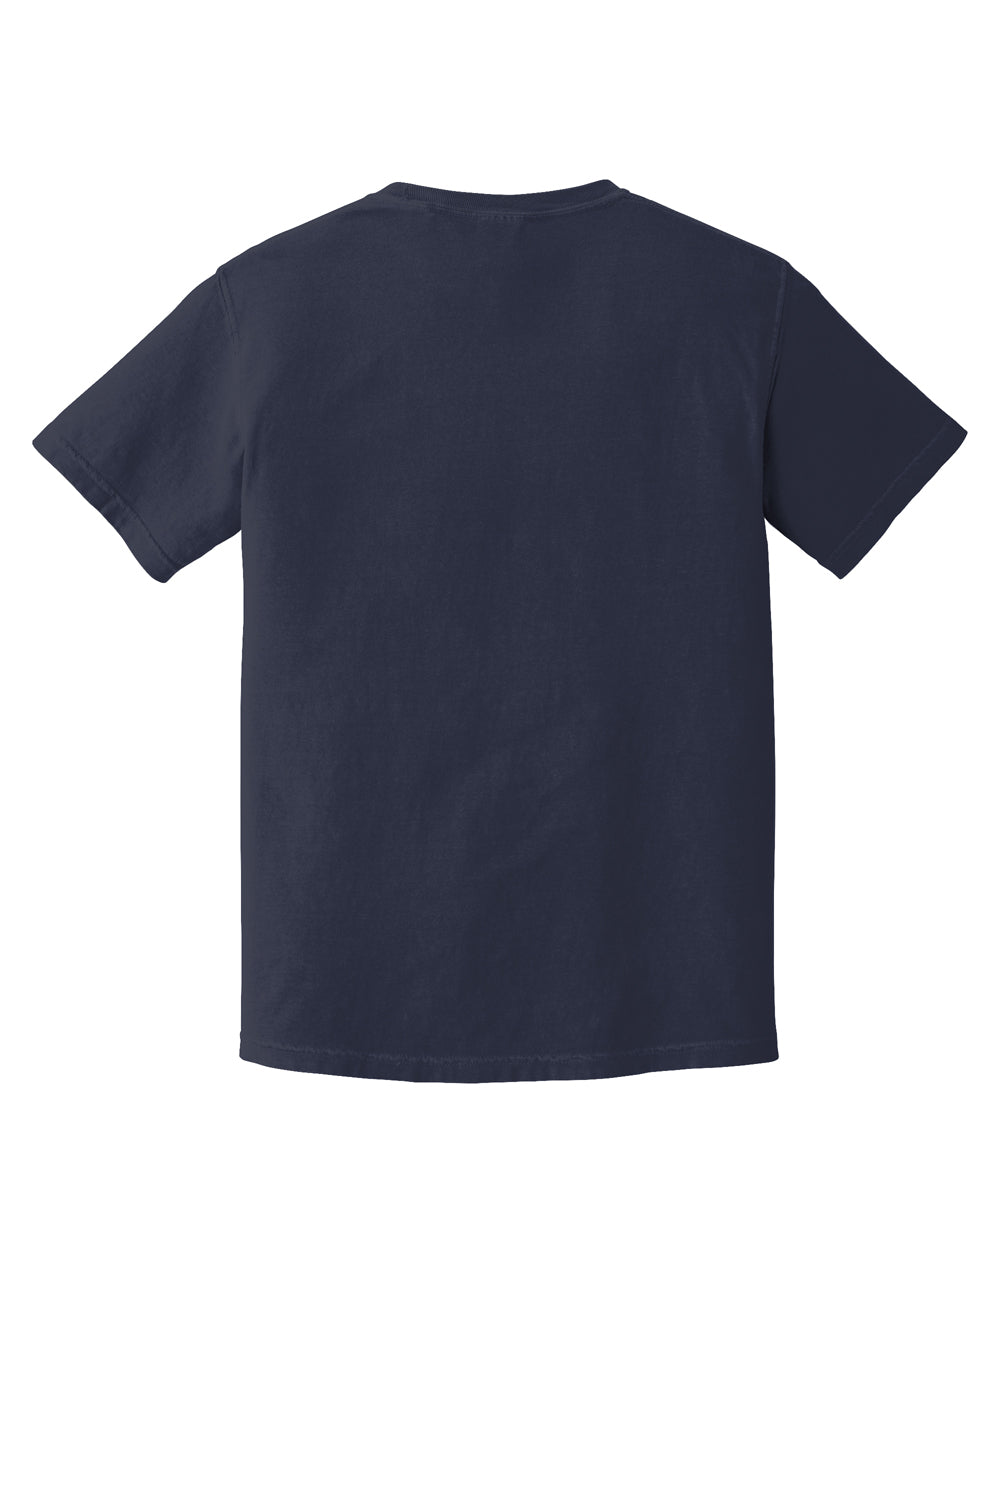 Comfort Colors Mens Short Sleeve Crewneck T-Shirt Navy Blue Flat Back